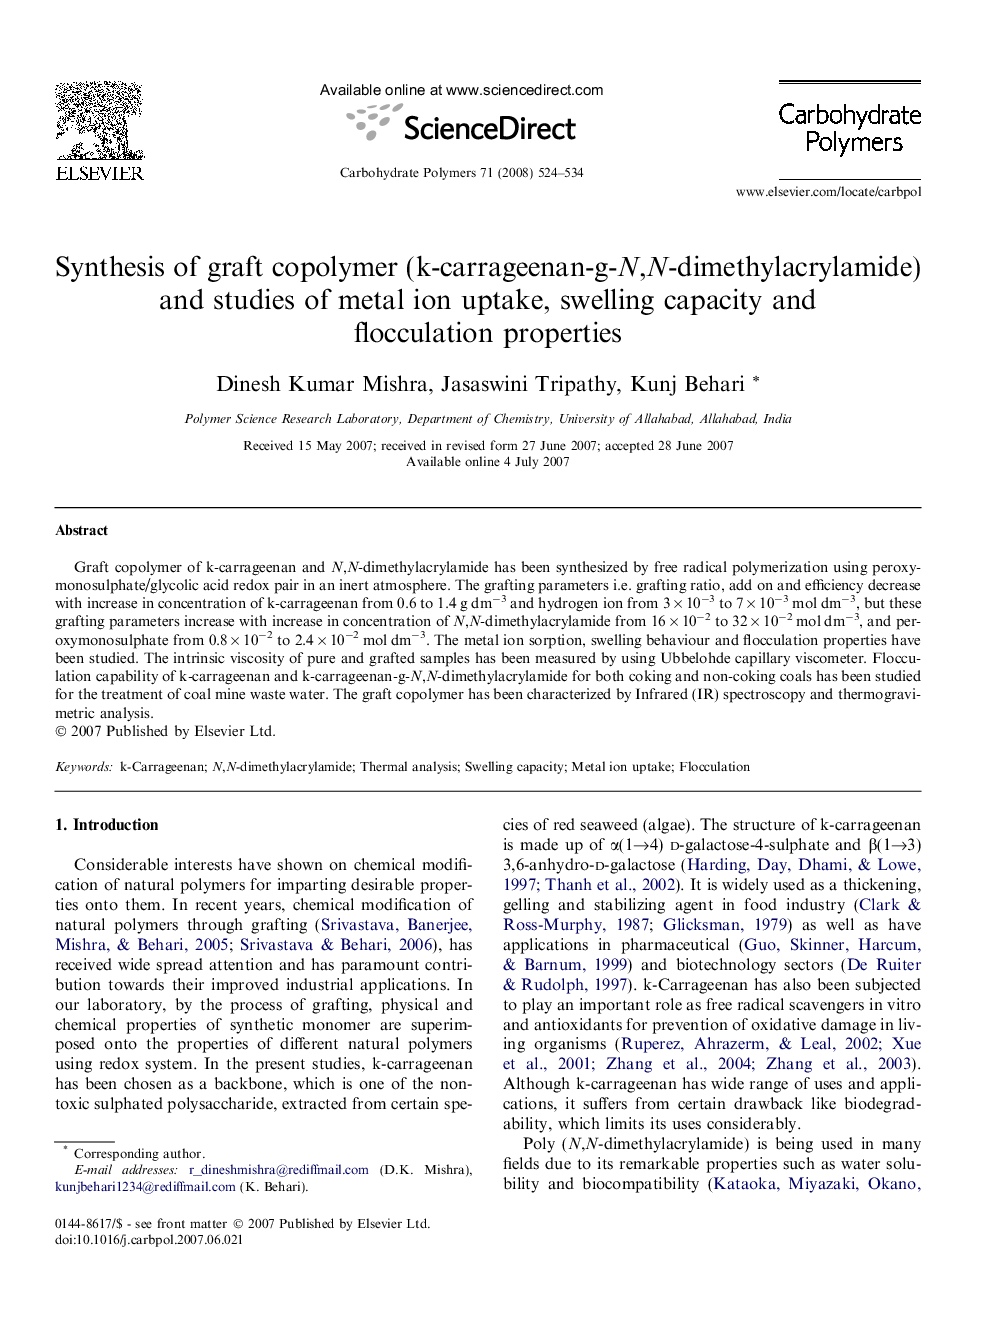 Synthesis of graft copolymer (k-carrageenan-g-N,N-dimethylacrylamide) and studies of metal ion uptake, swelling capacity and flocculation properties